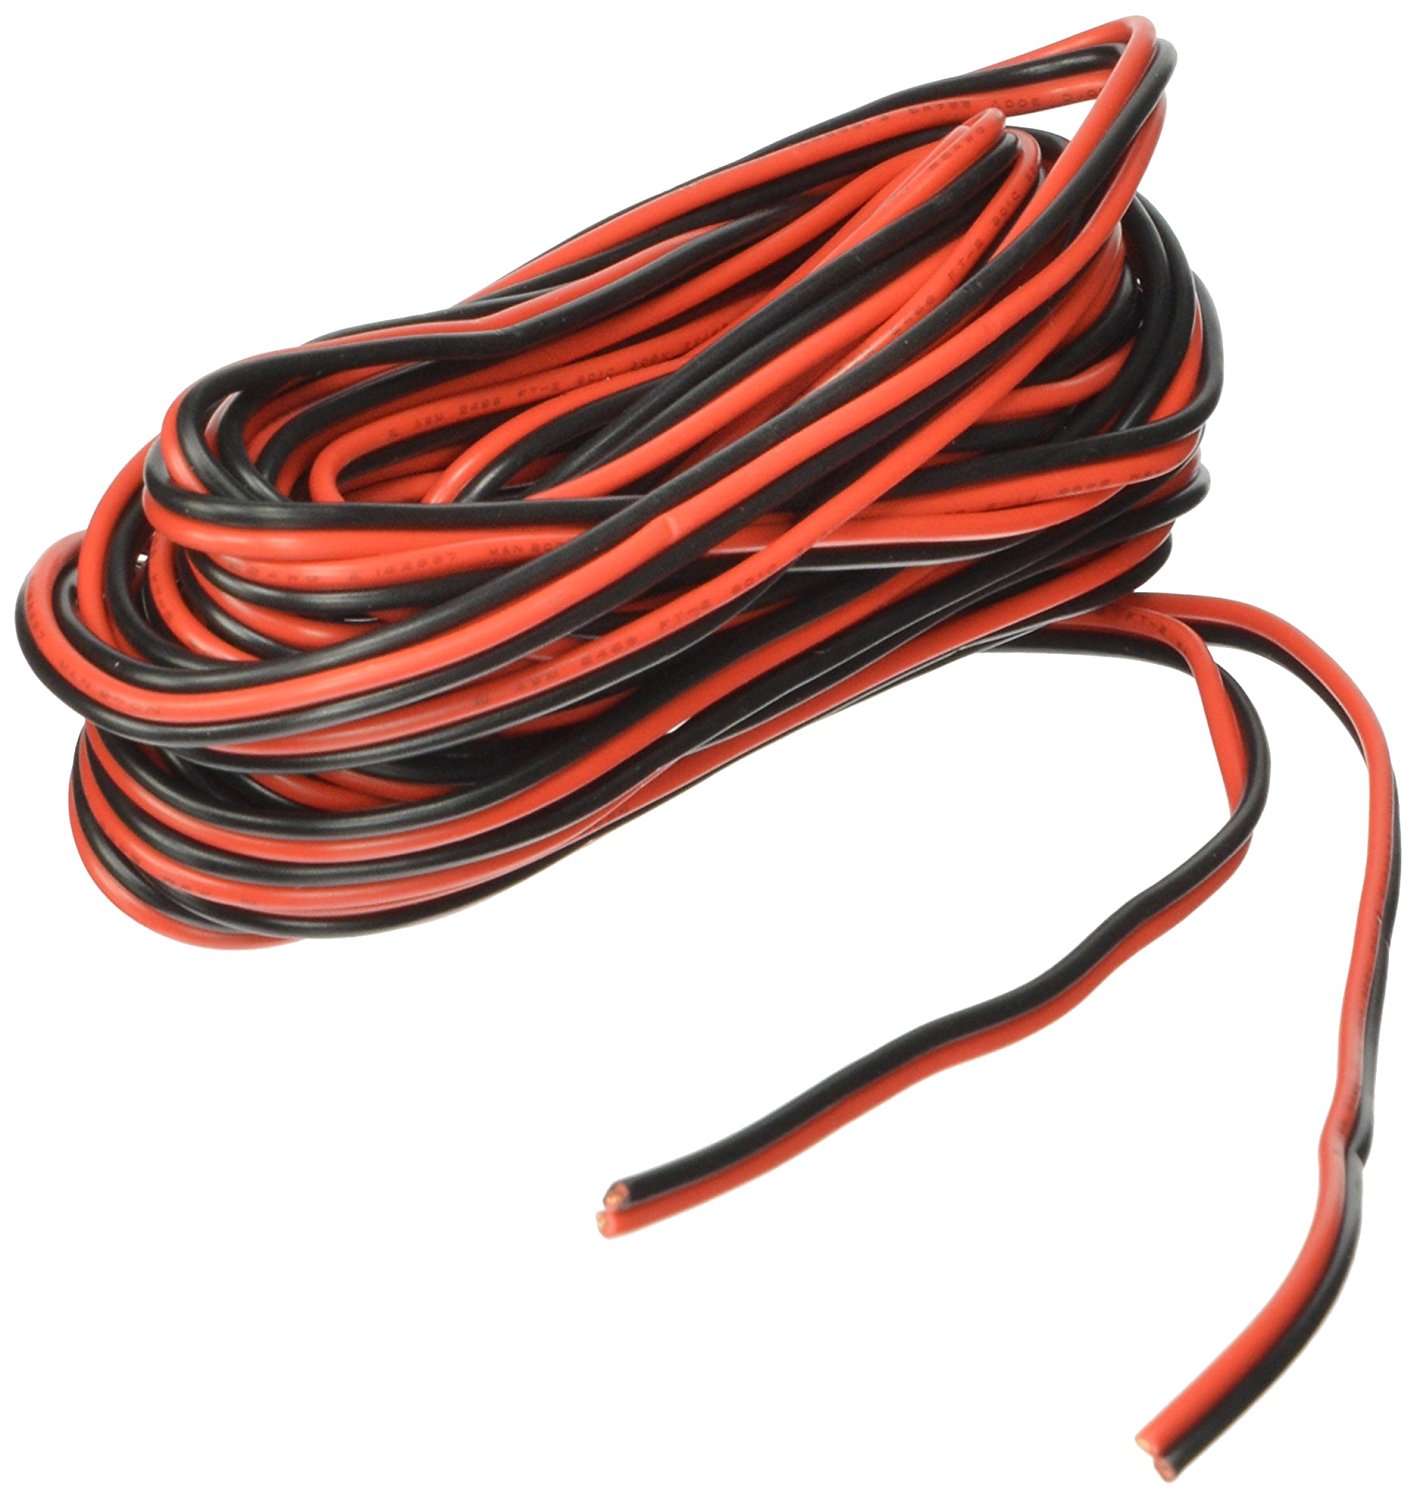 Amazon.com: RoadPro – 25' Hardwire Replacement 2 Wire 22-Gauge ...